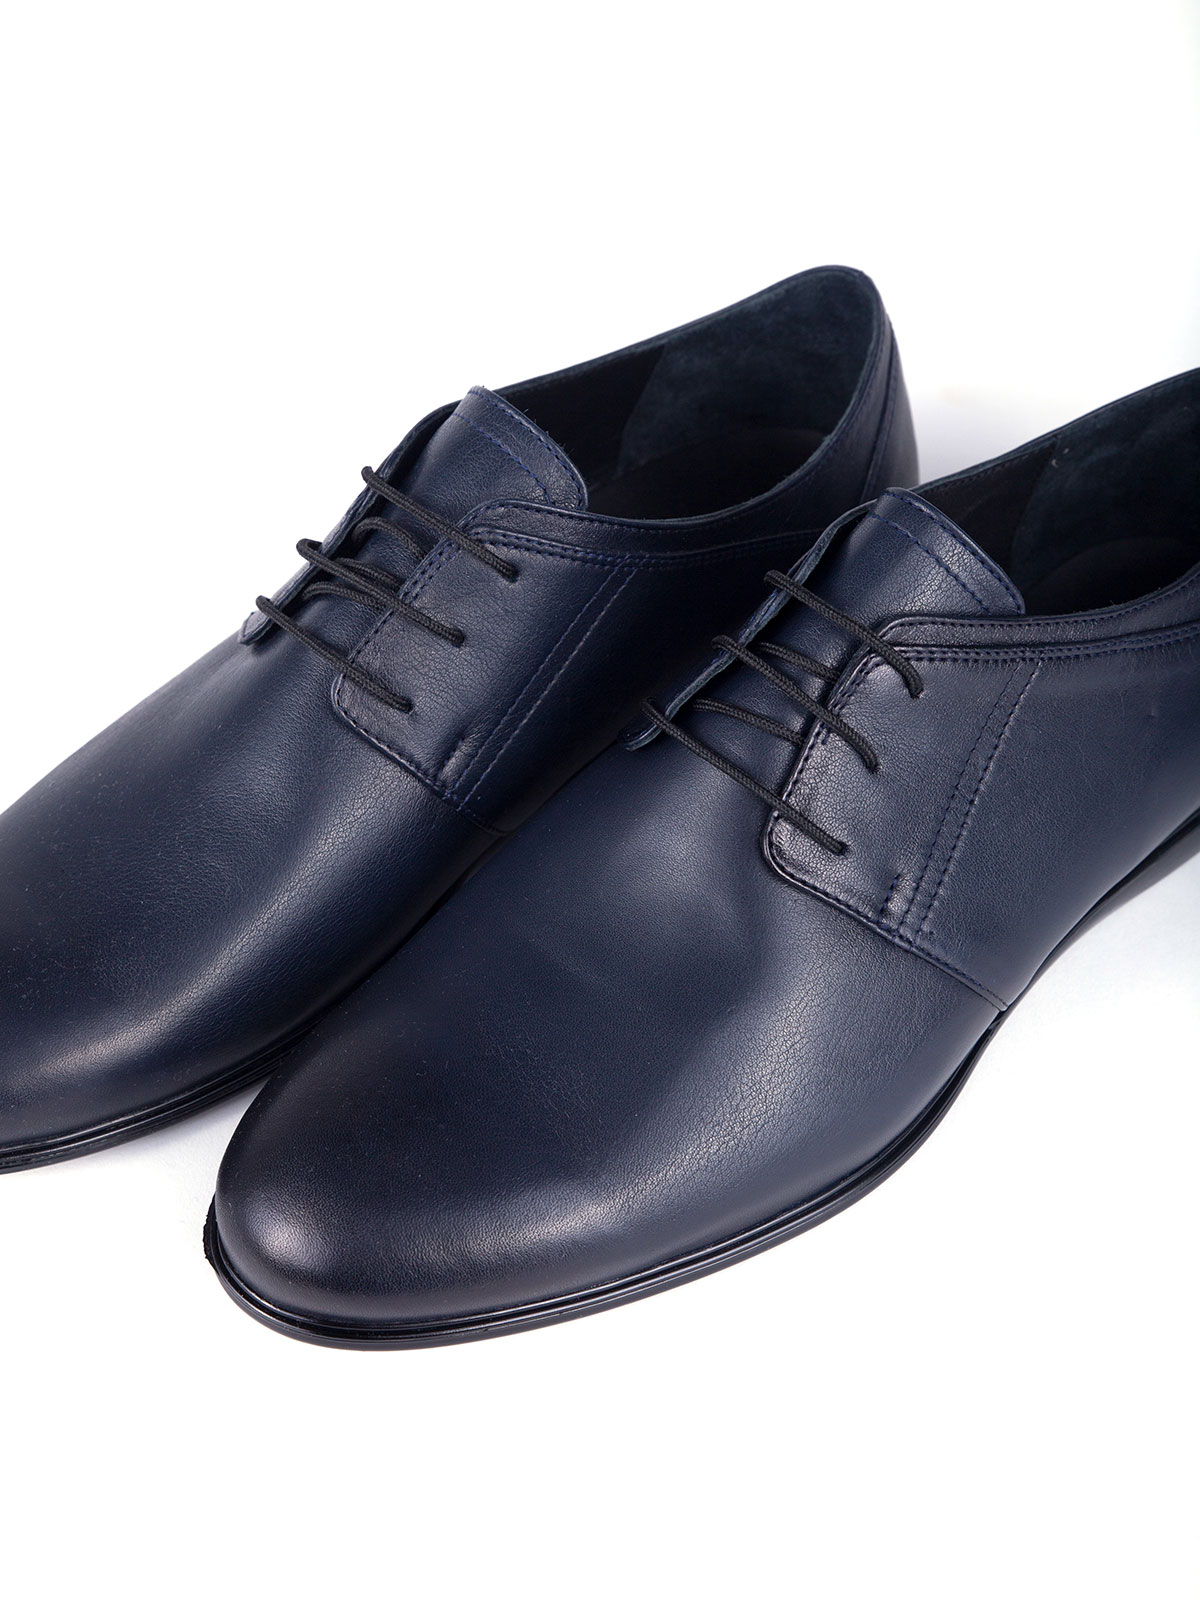 Dark blue shoes - 81054 - € 50.06 img4